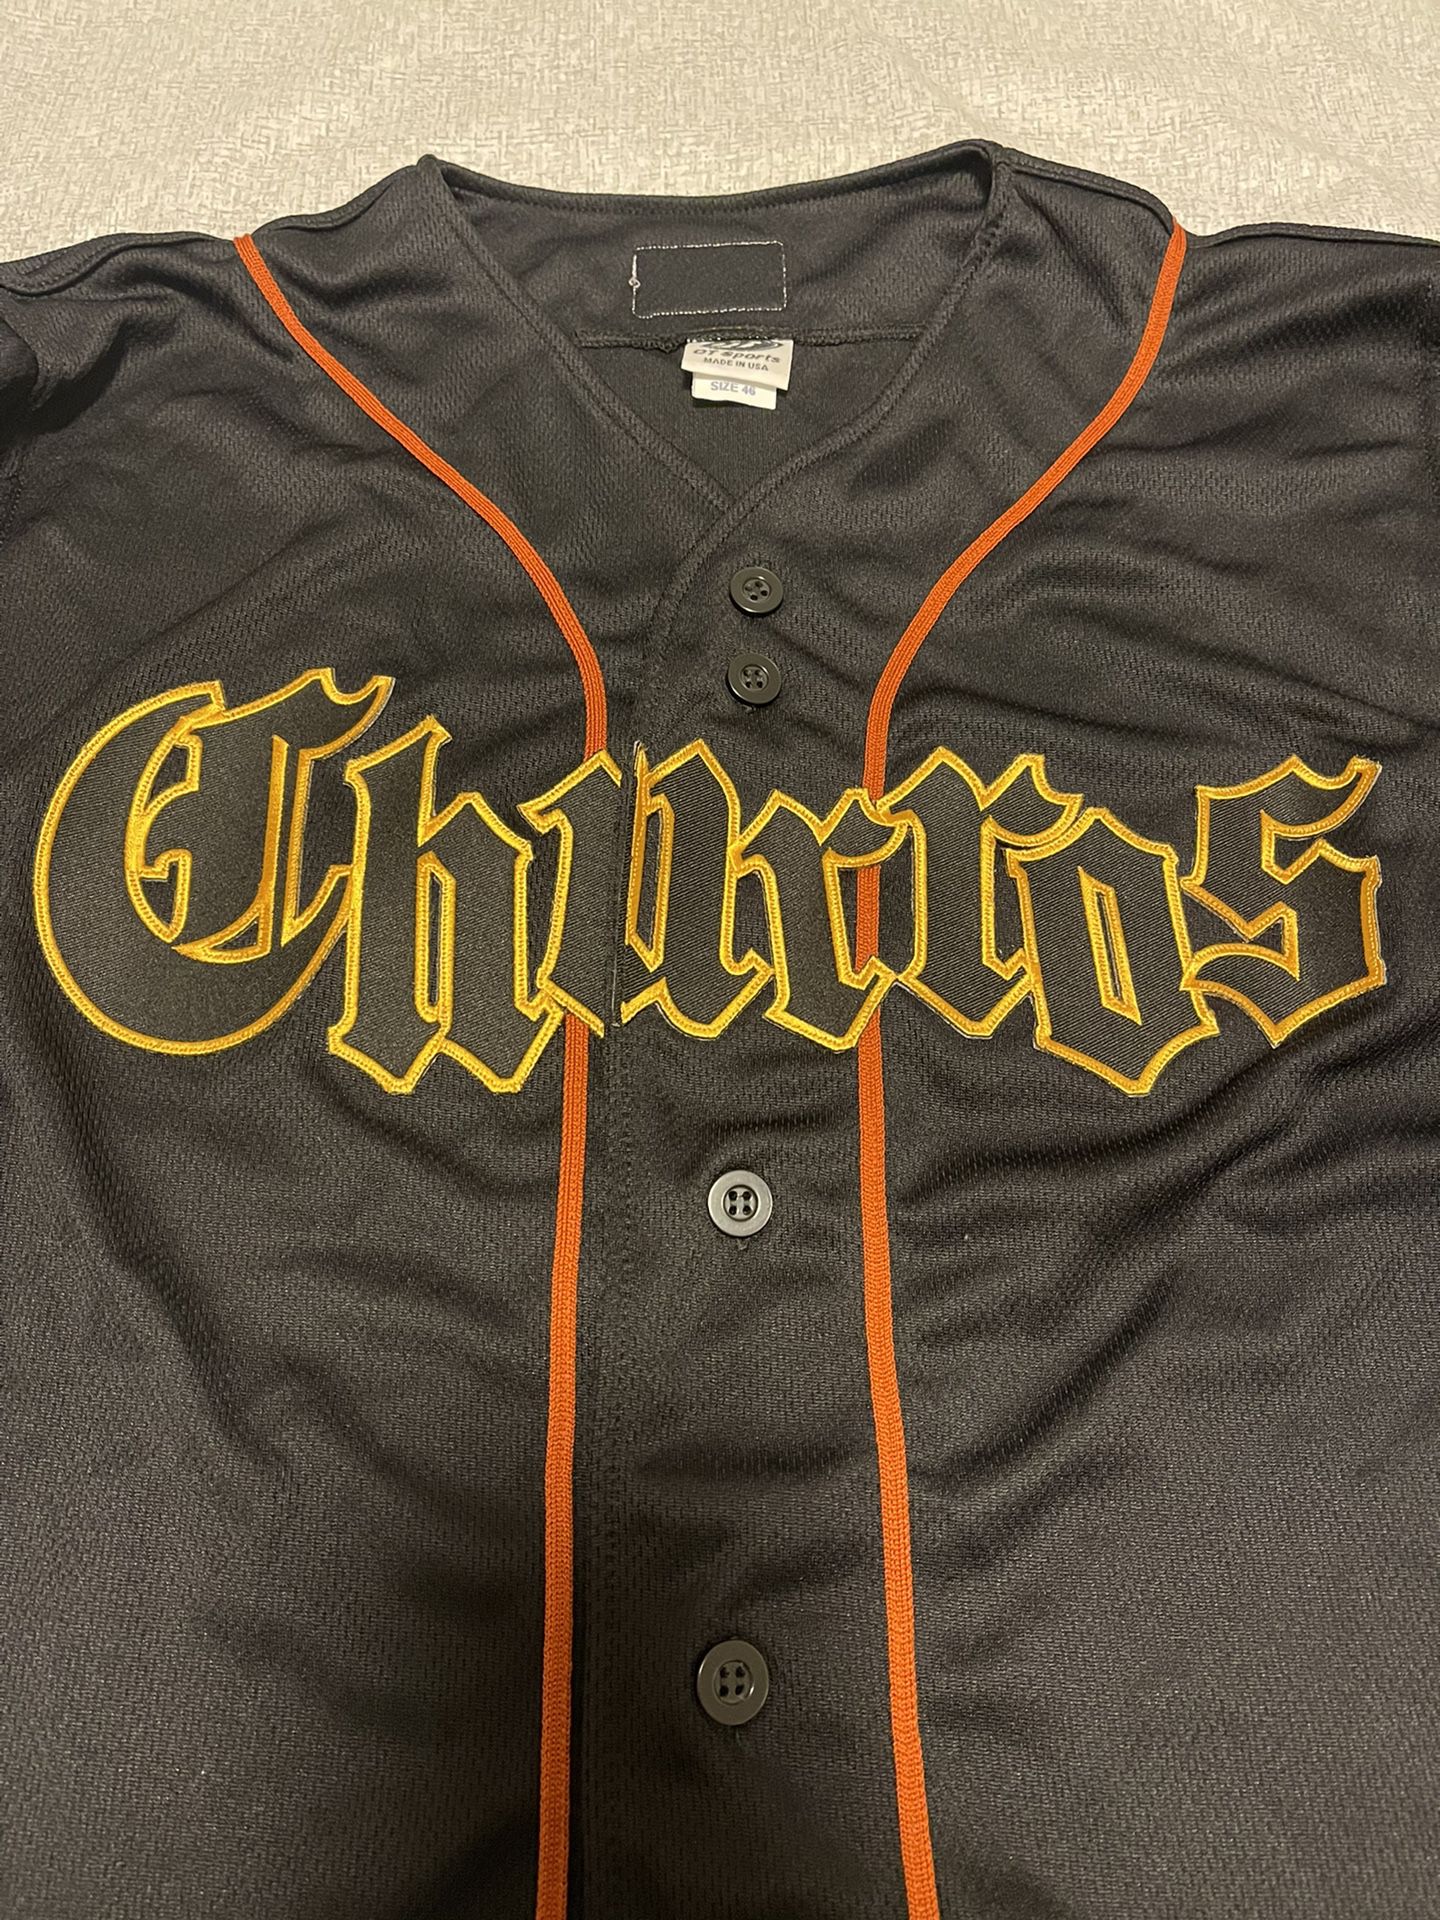 San Jose Giants Churros Jersey XL : r/baseballunis